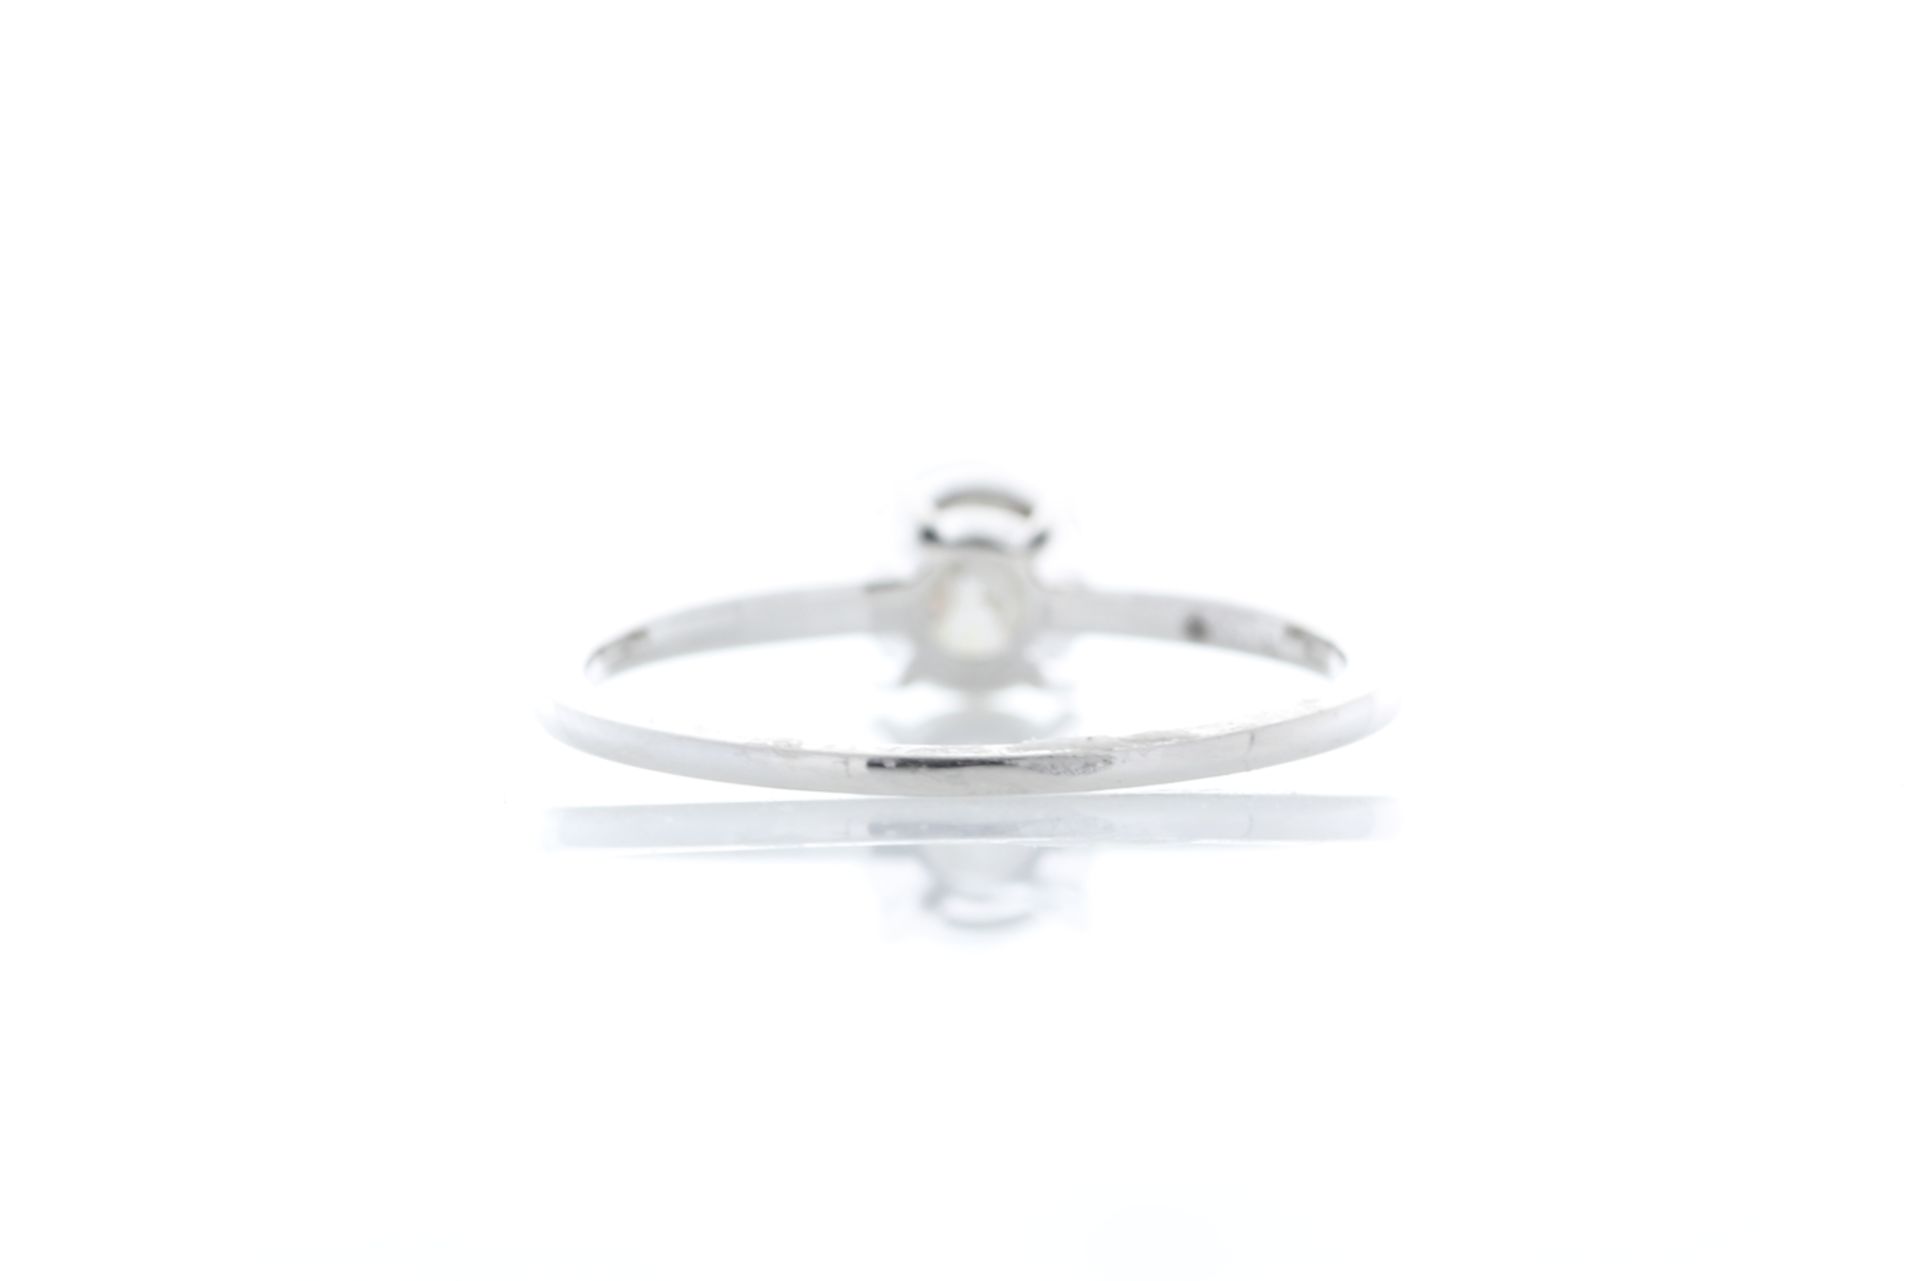 18ct White Gold Single Stone Prong Set With Stone Set Shoulders Diamond Ring 1.01 Carats - Image 3 of 5